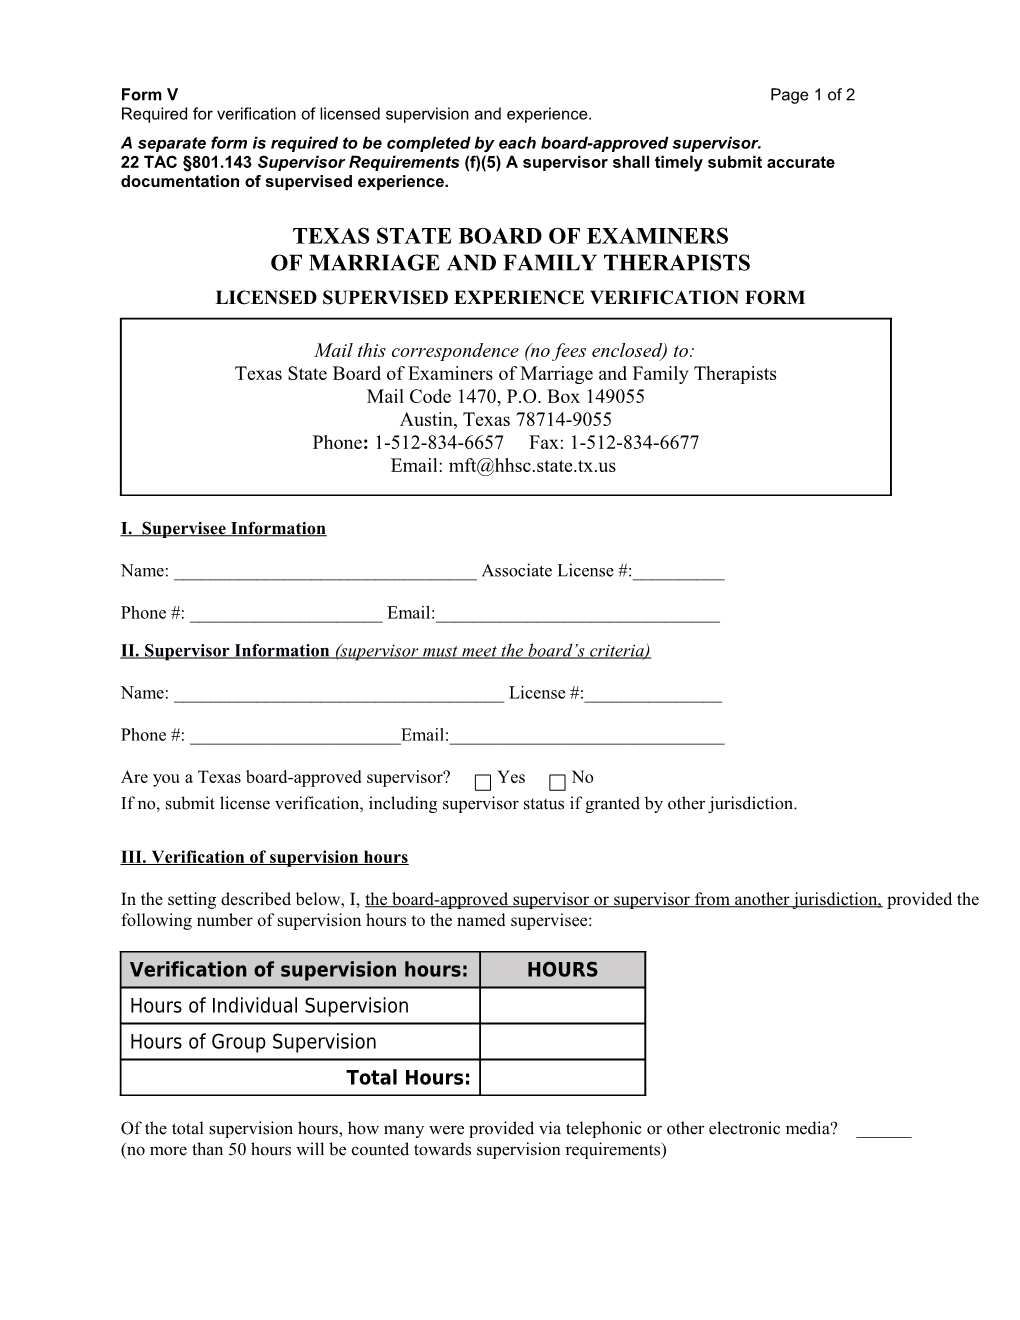 MFT Licensed Supervised Experience Verification Form